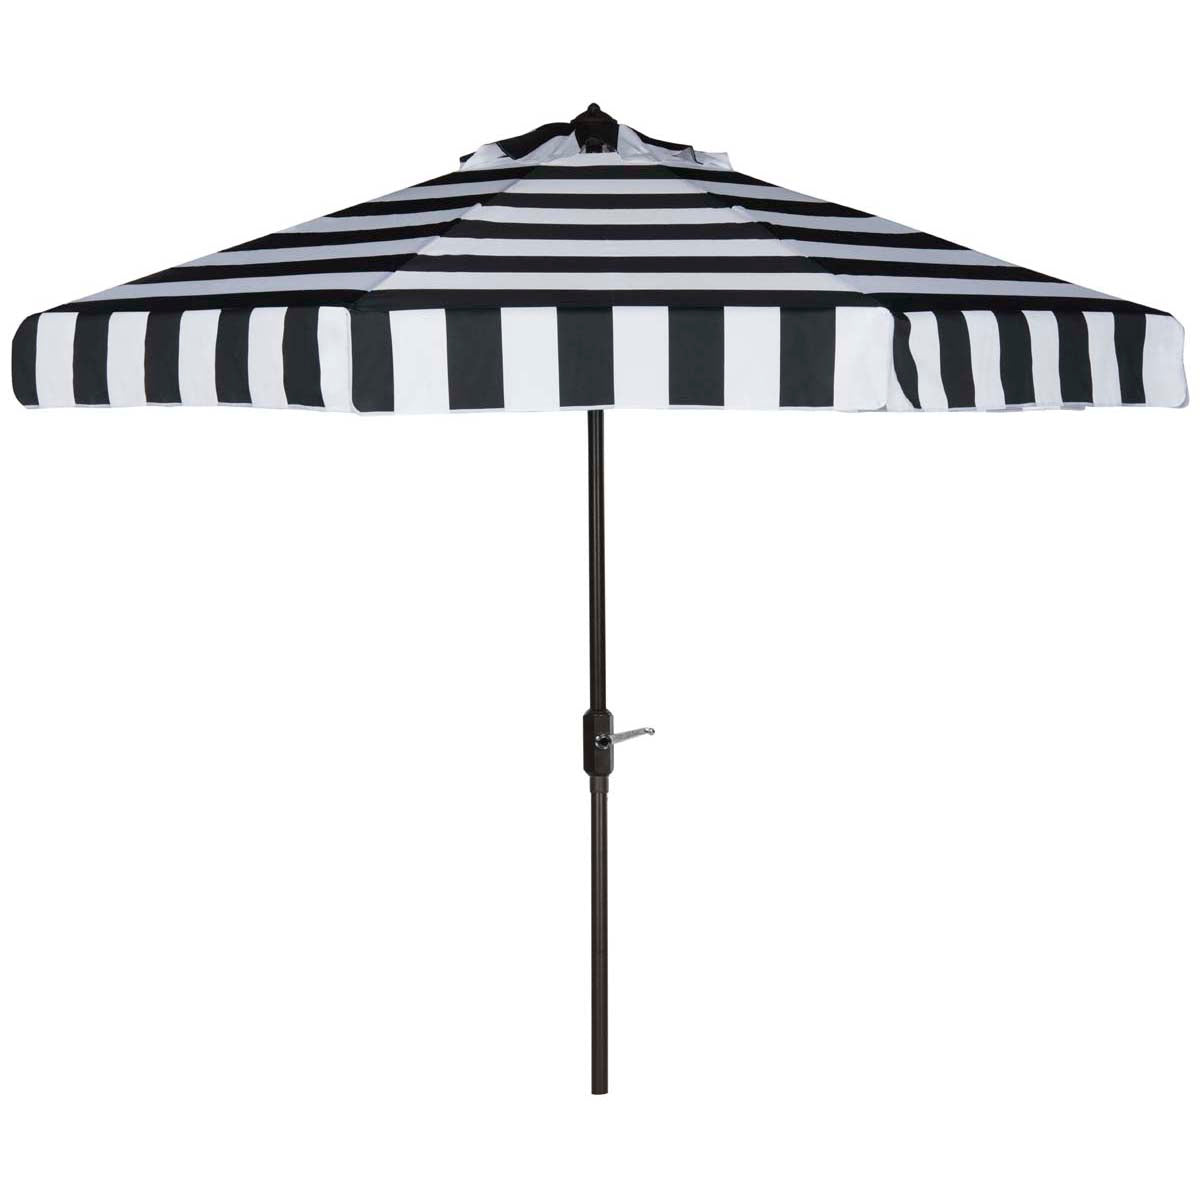 Safavieh Uv Resistant Elsa Fashion Line 9Ft Auto Tilt Umbrella , PAT8003 - Black/White